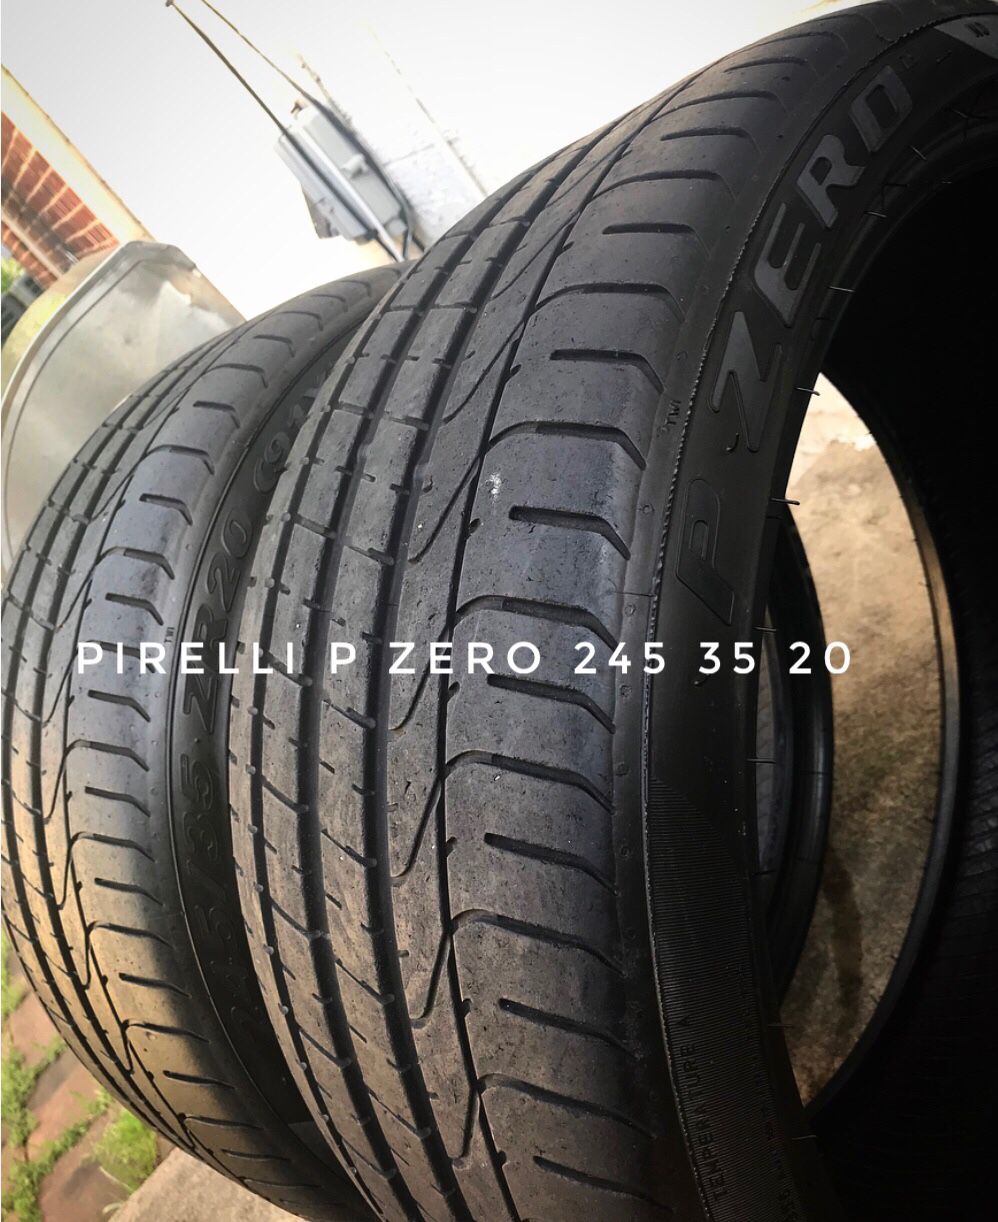 Pirelli P Zero 245 35 20 x2